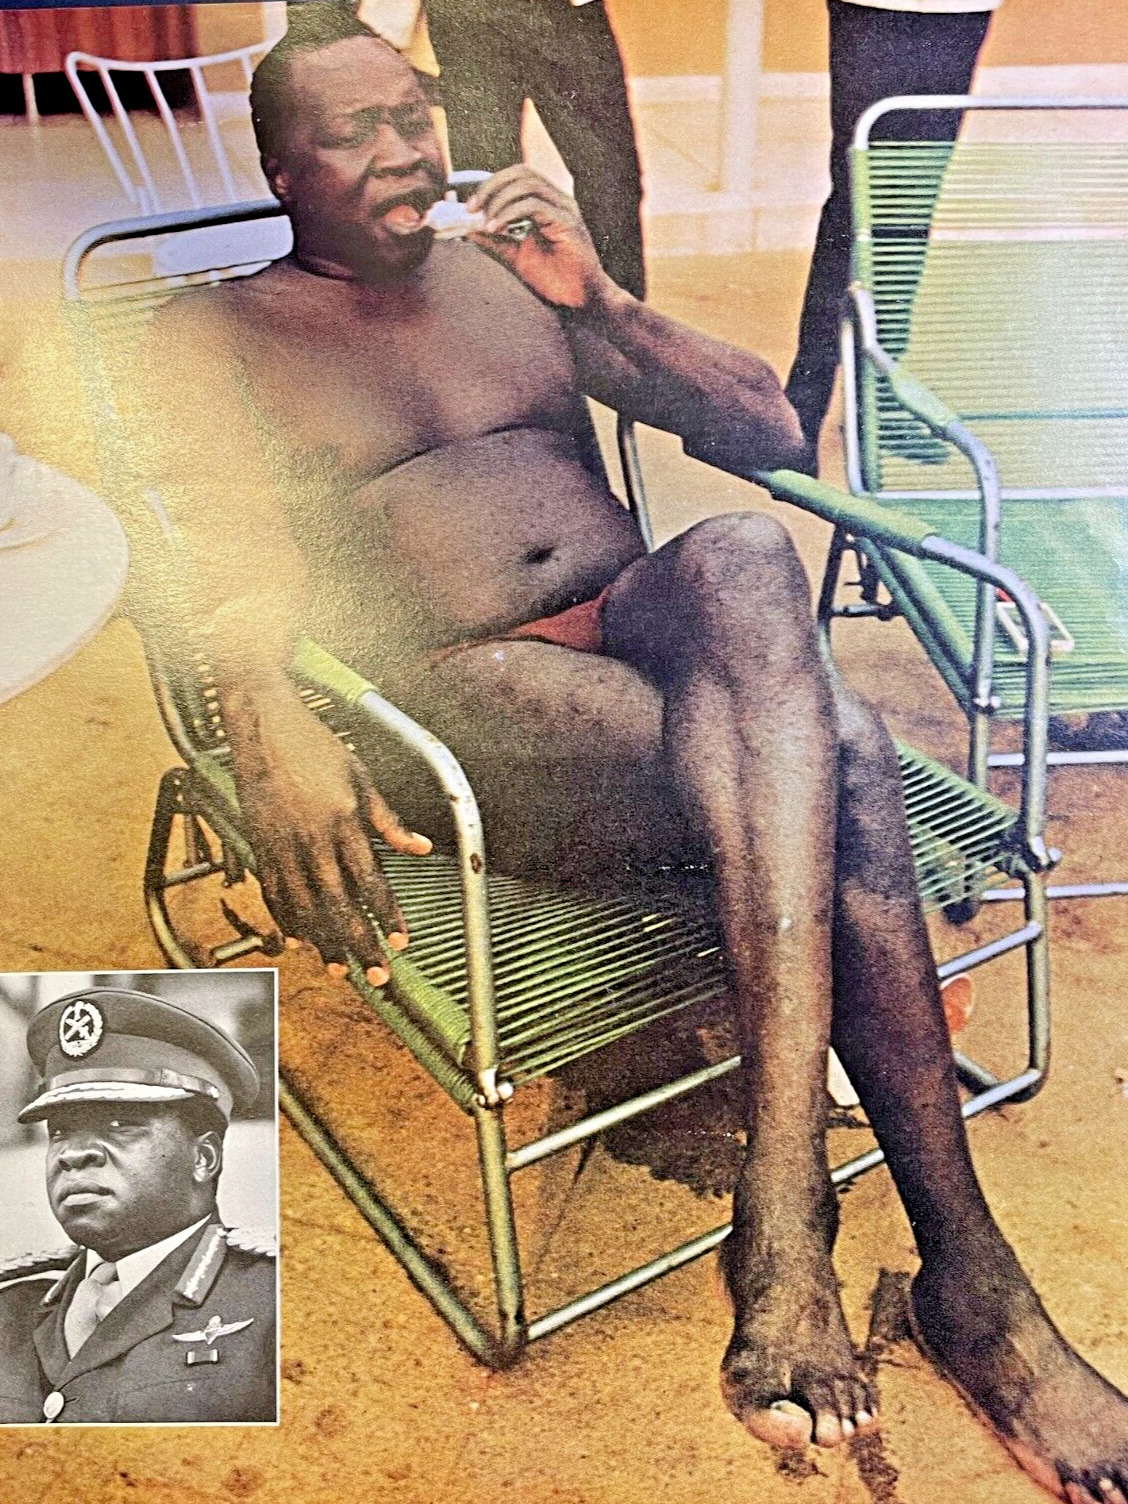 1972 Magazine Illustration Idi Amin Dada Oumee Third President of Uganda